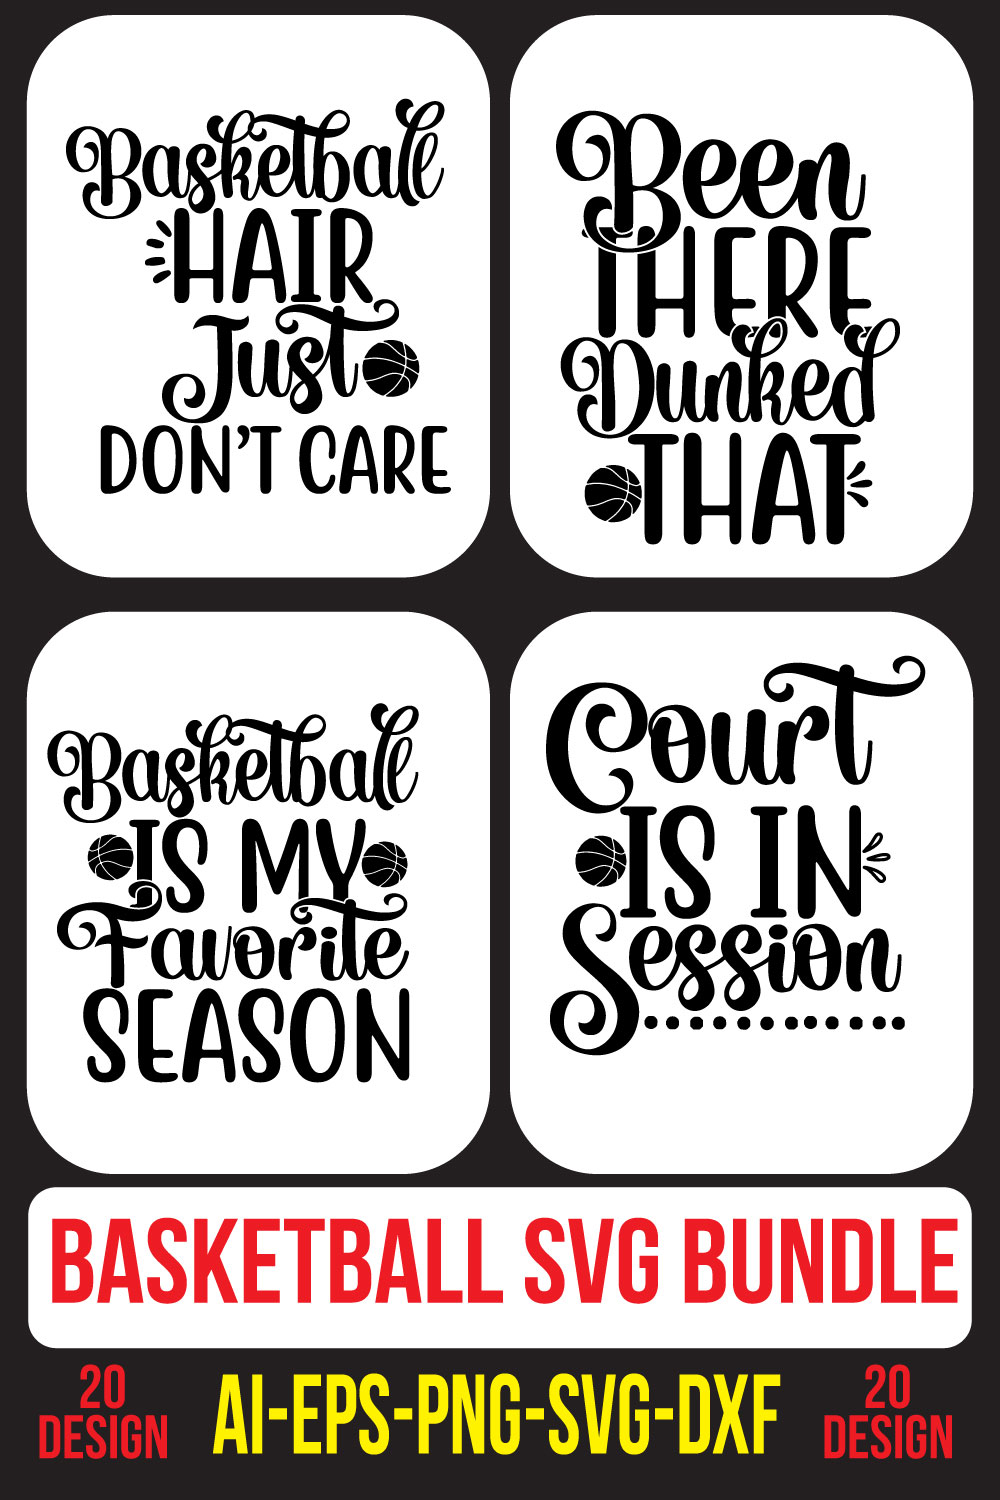 Basketball SVG Bundle pinterest preview image.